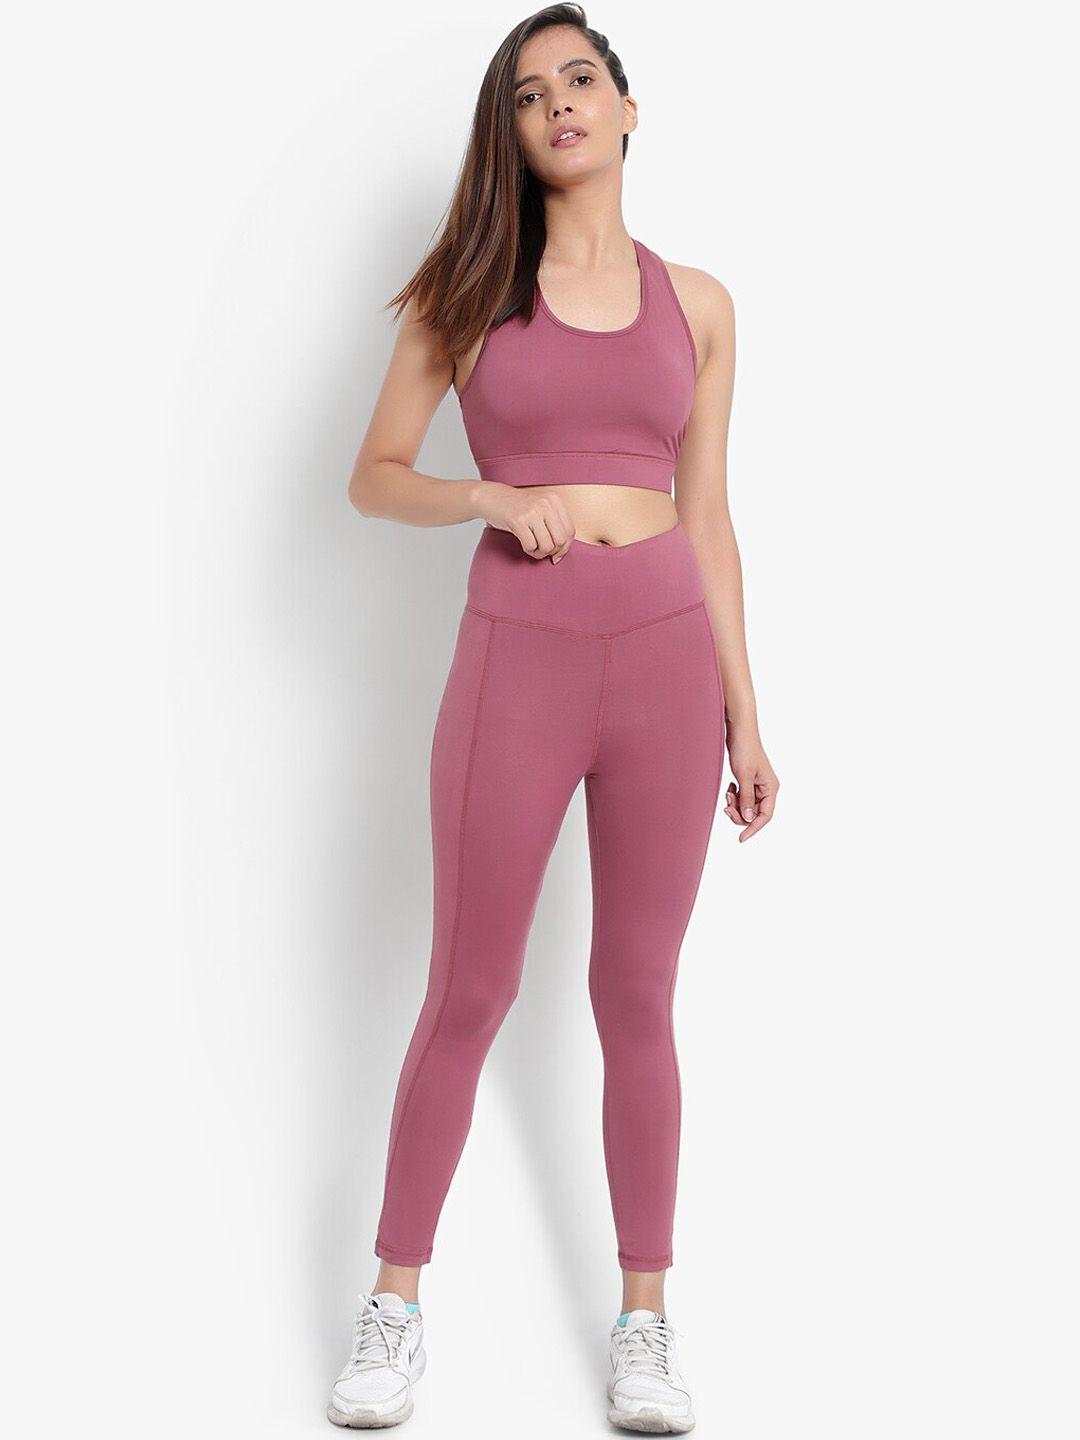 wearjukebox women pink top with leggings